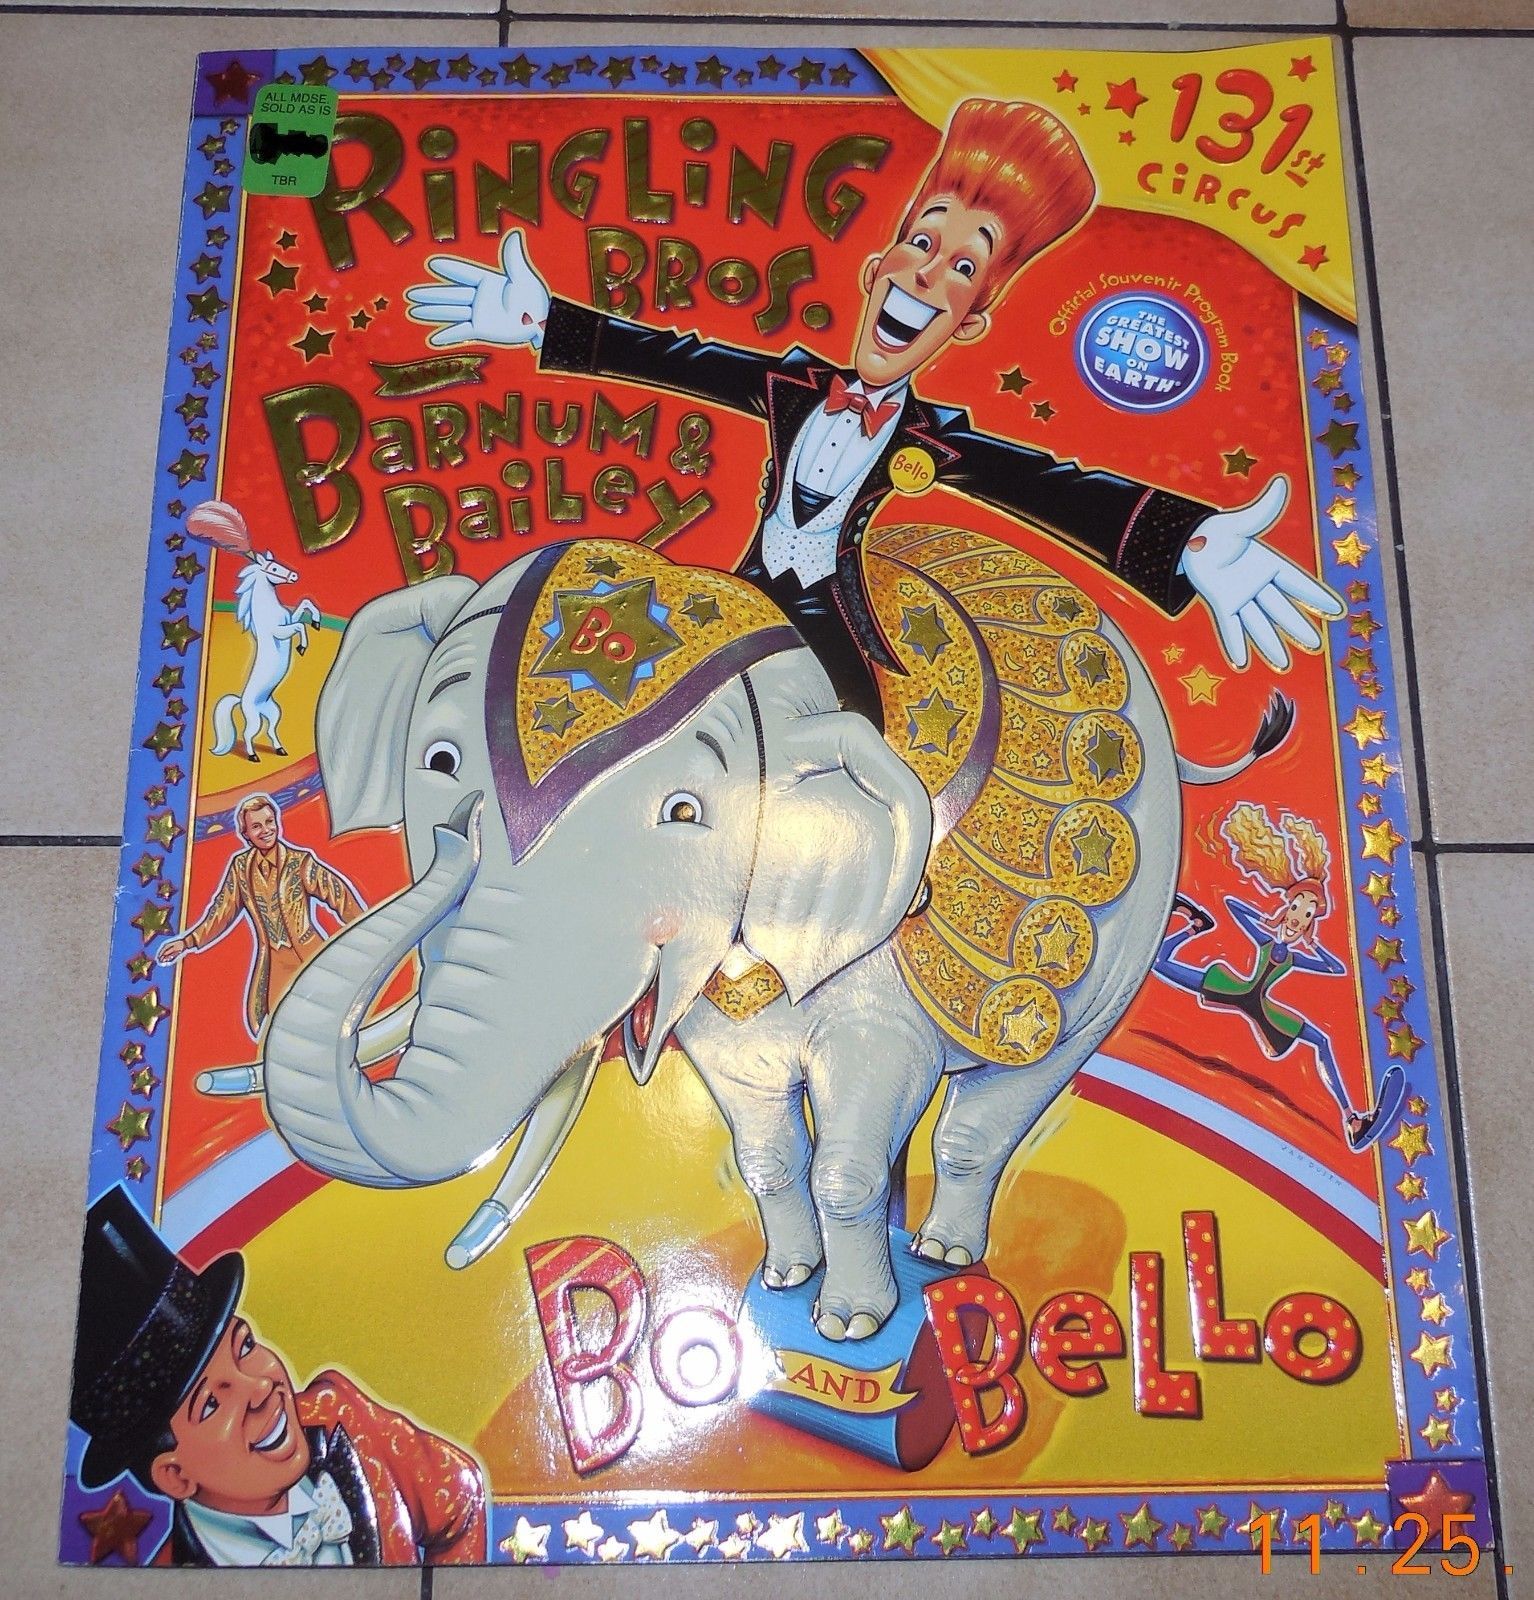 St Ringling Bros Barnum Bailey And Similar Items